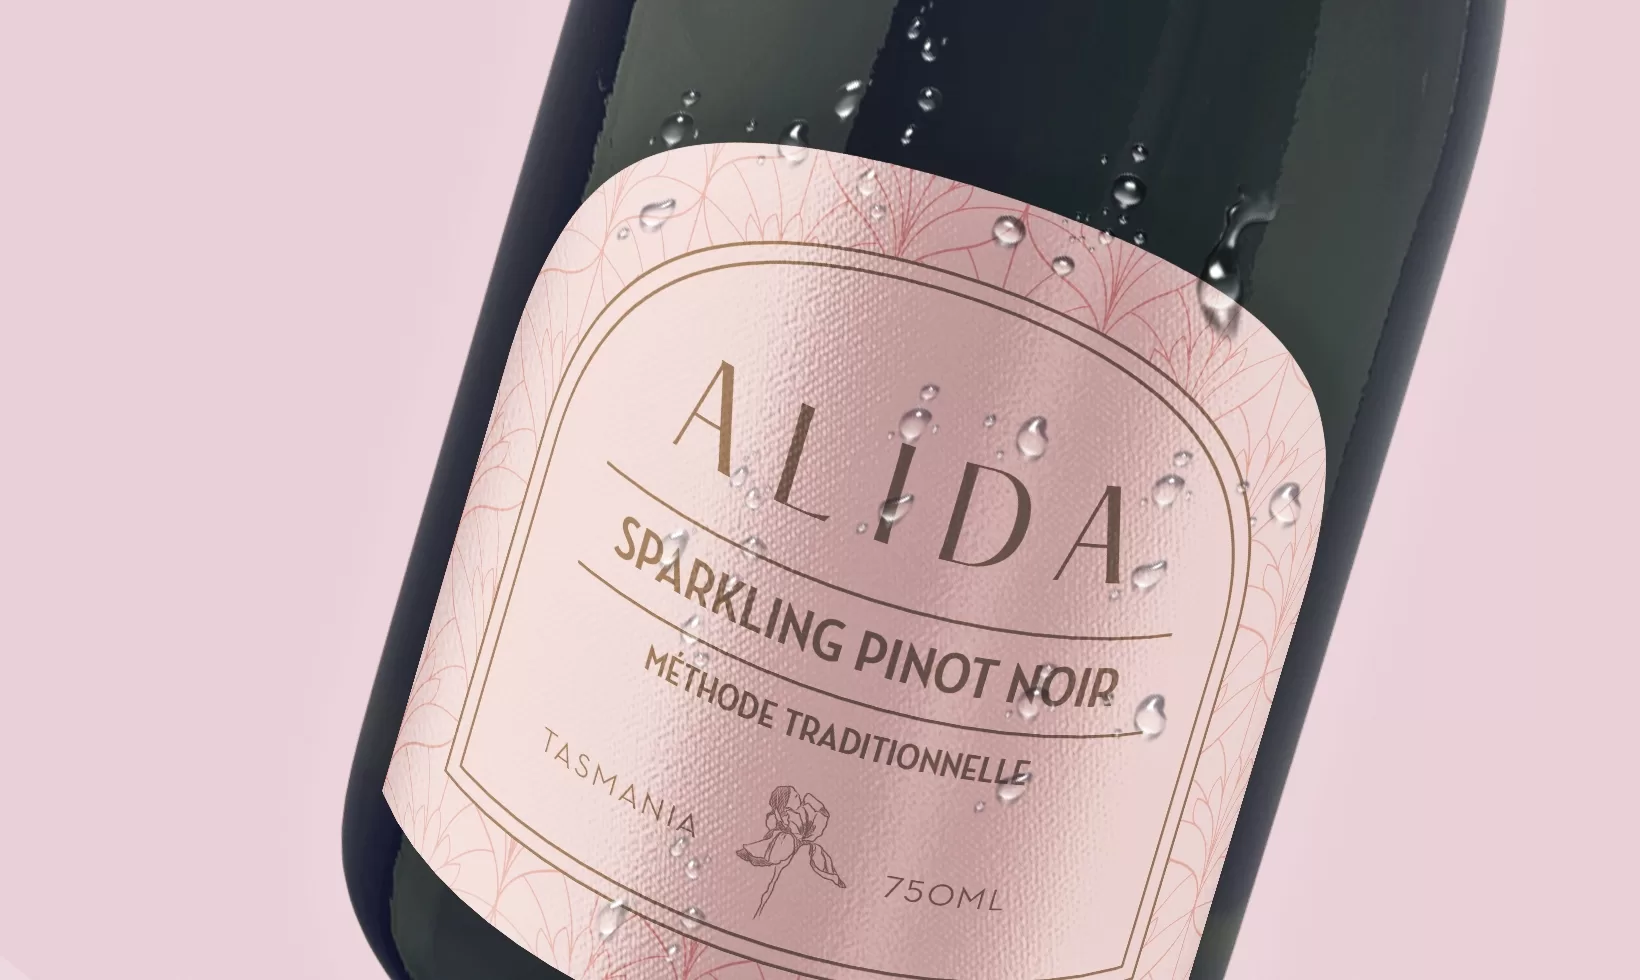 Alida Sparkling Pinot Noir Label Design